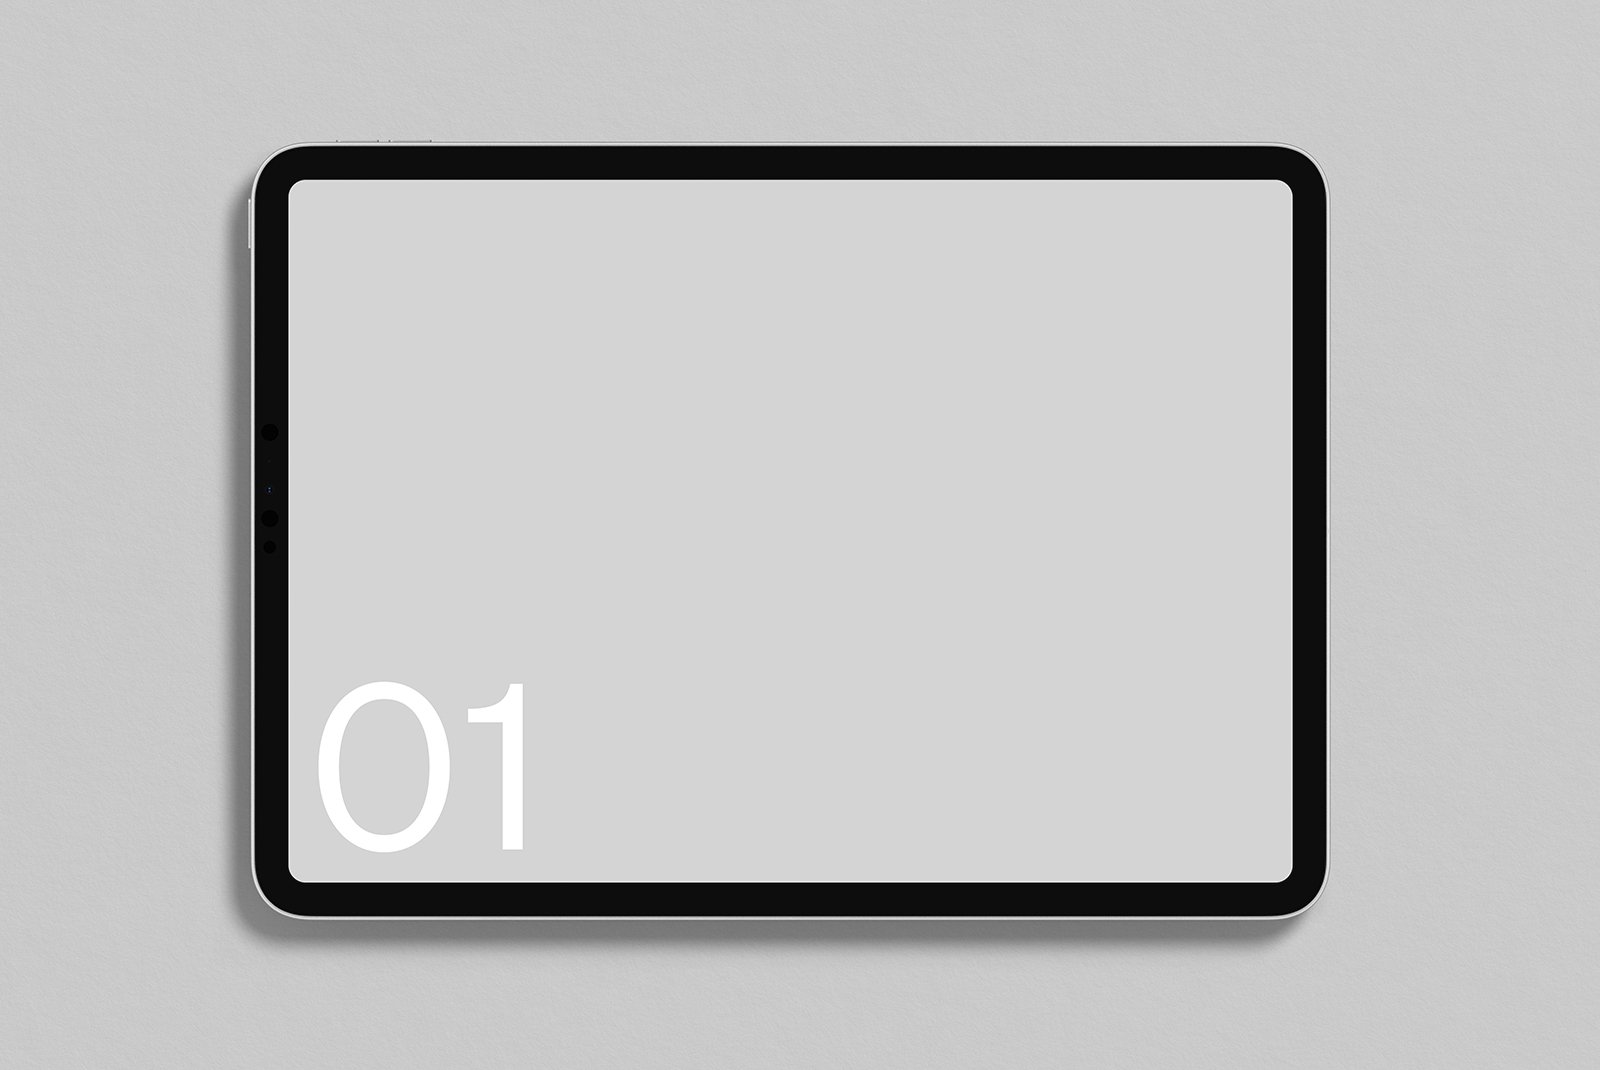 iPad Pro 01 Standard Mockup cover image.